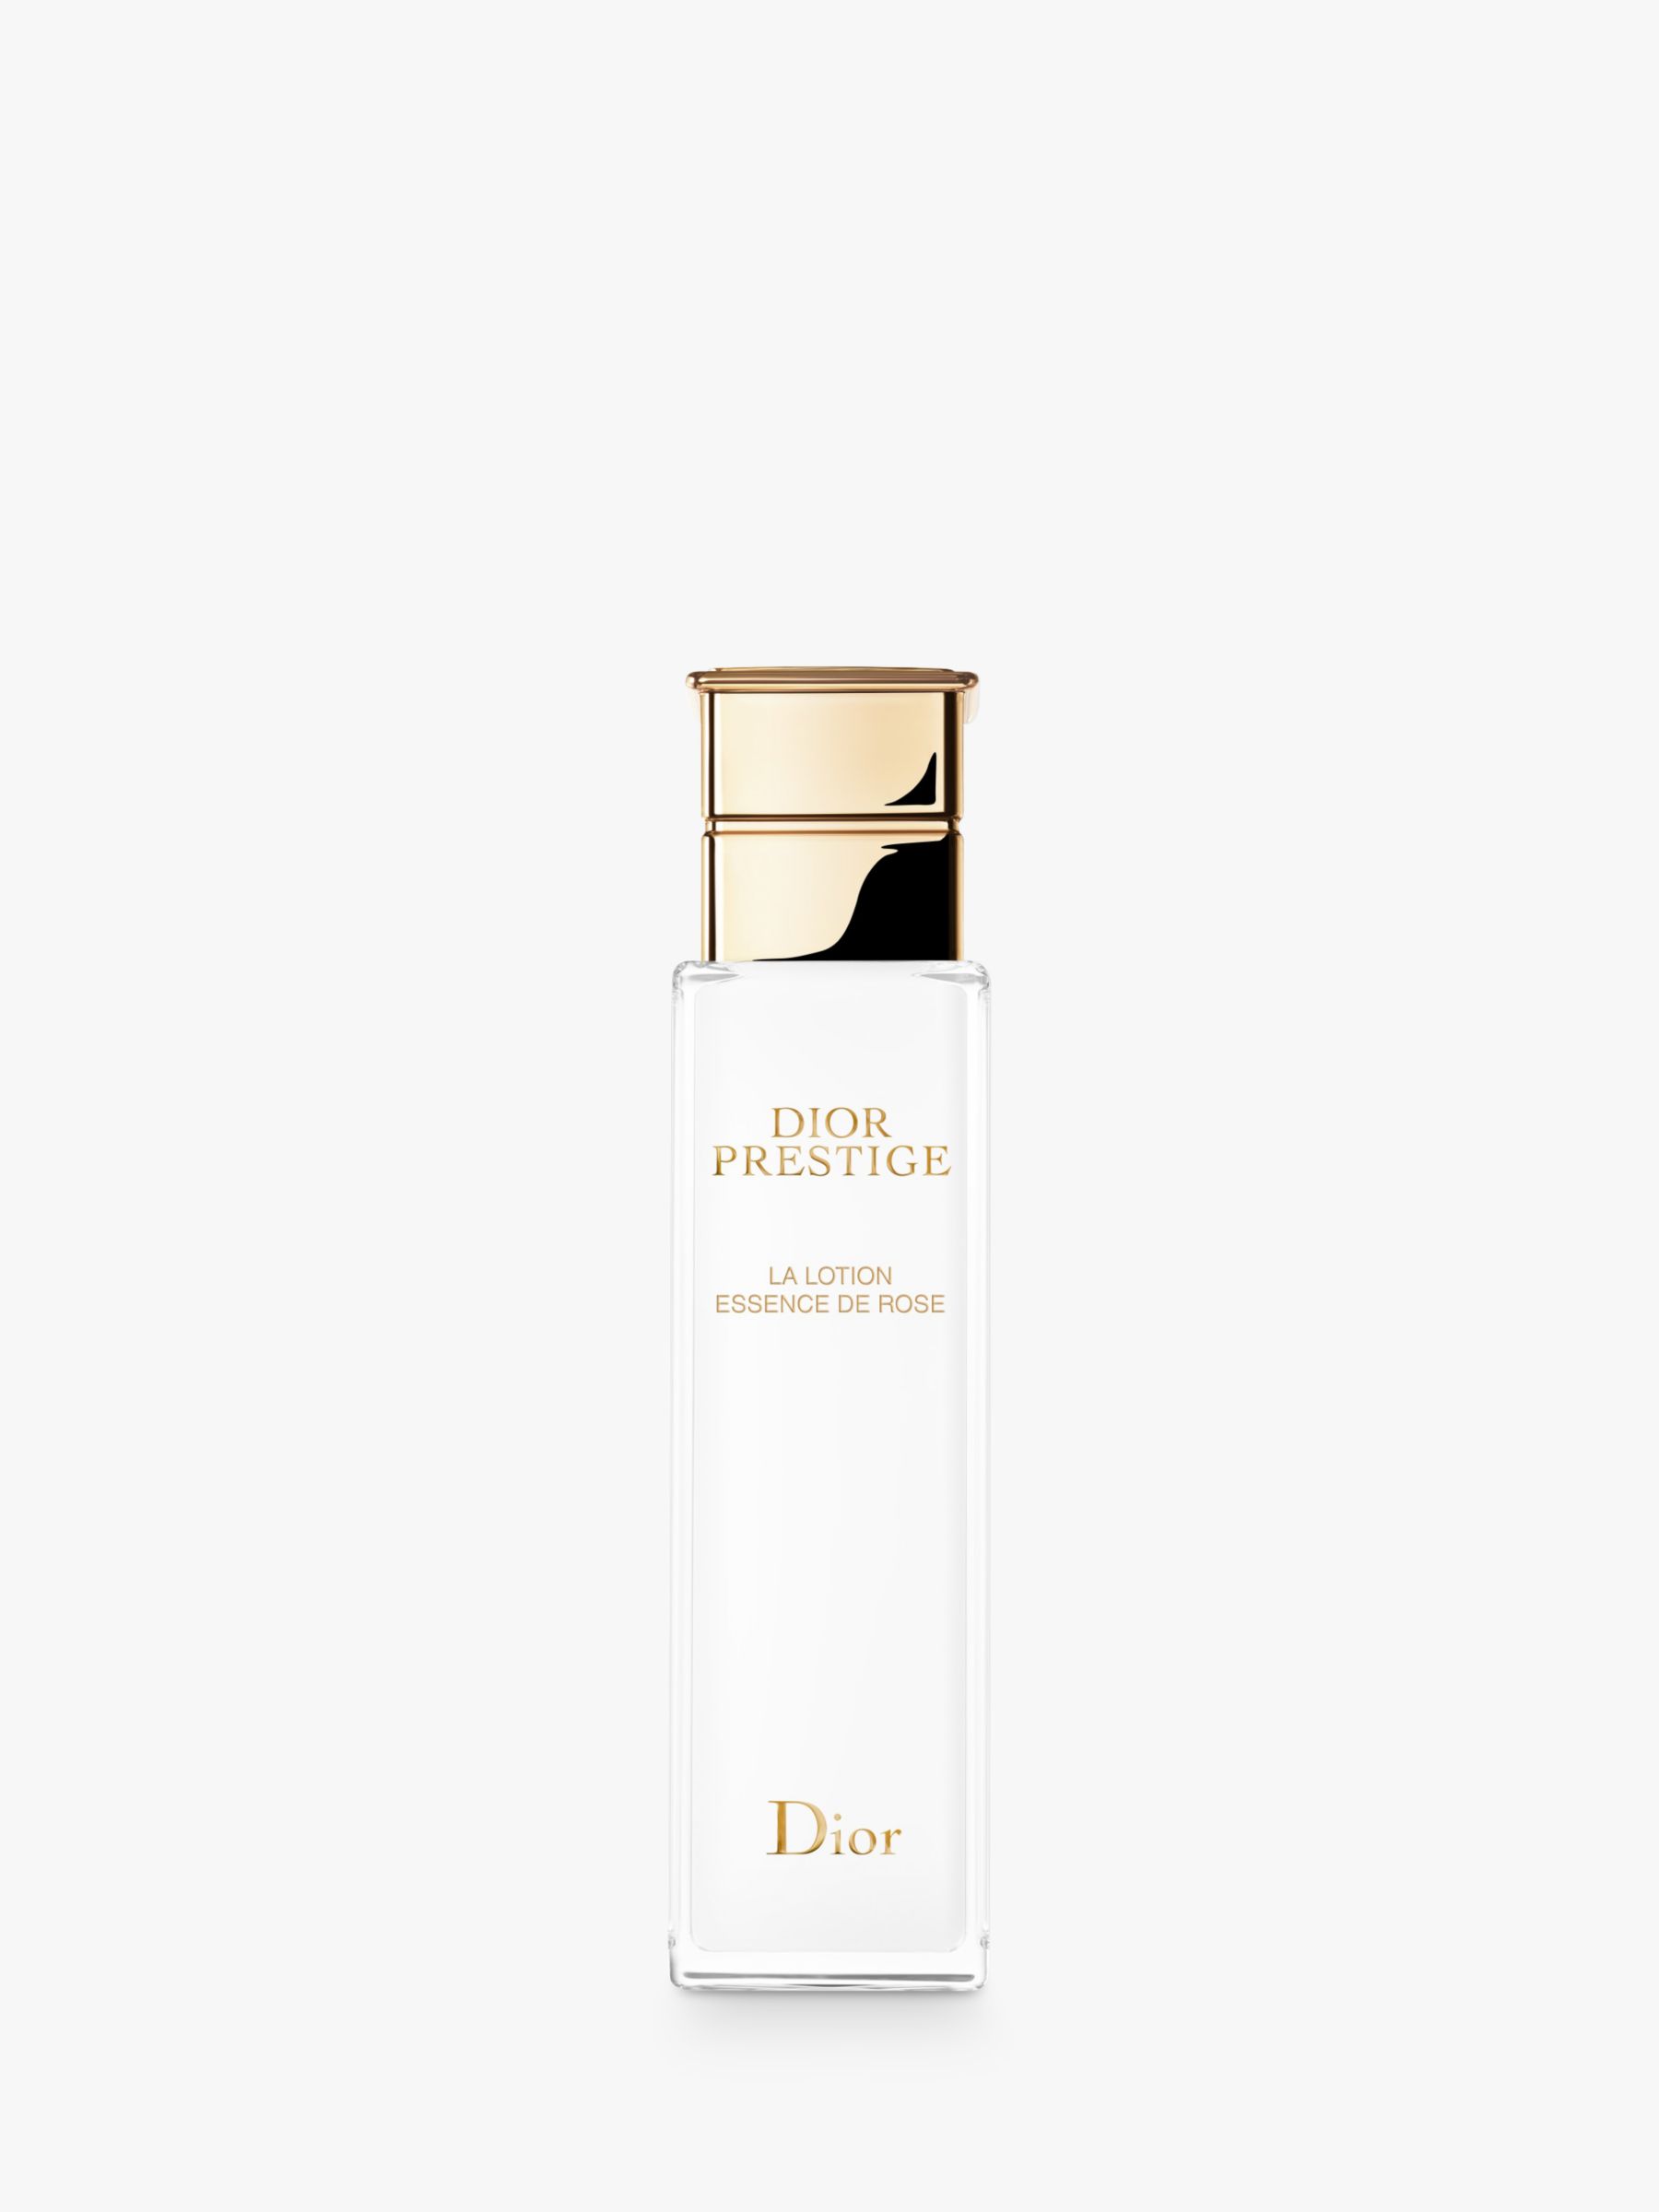 Dior Prestige La Lotion Essence de Rose, 150ml at John Lewis & Partners